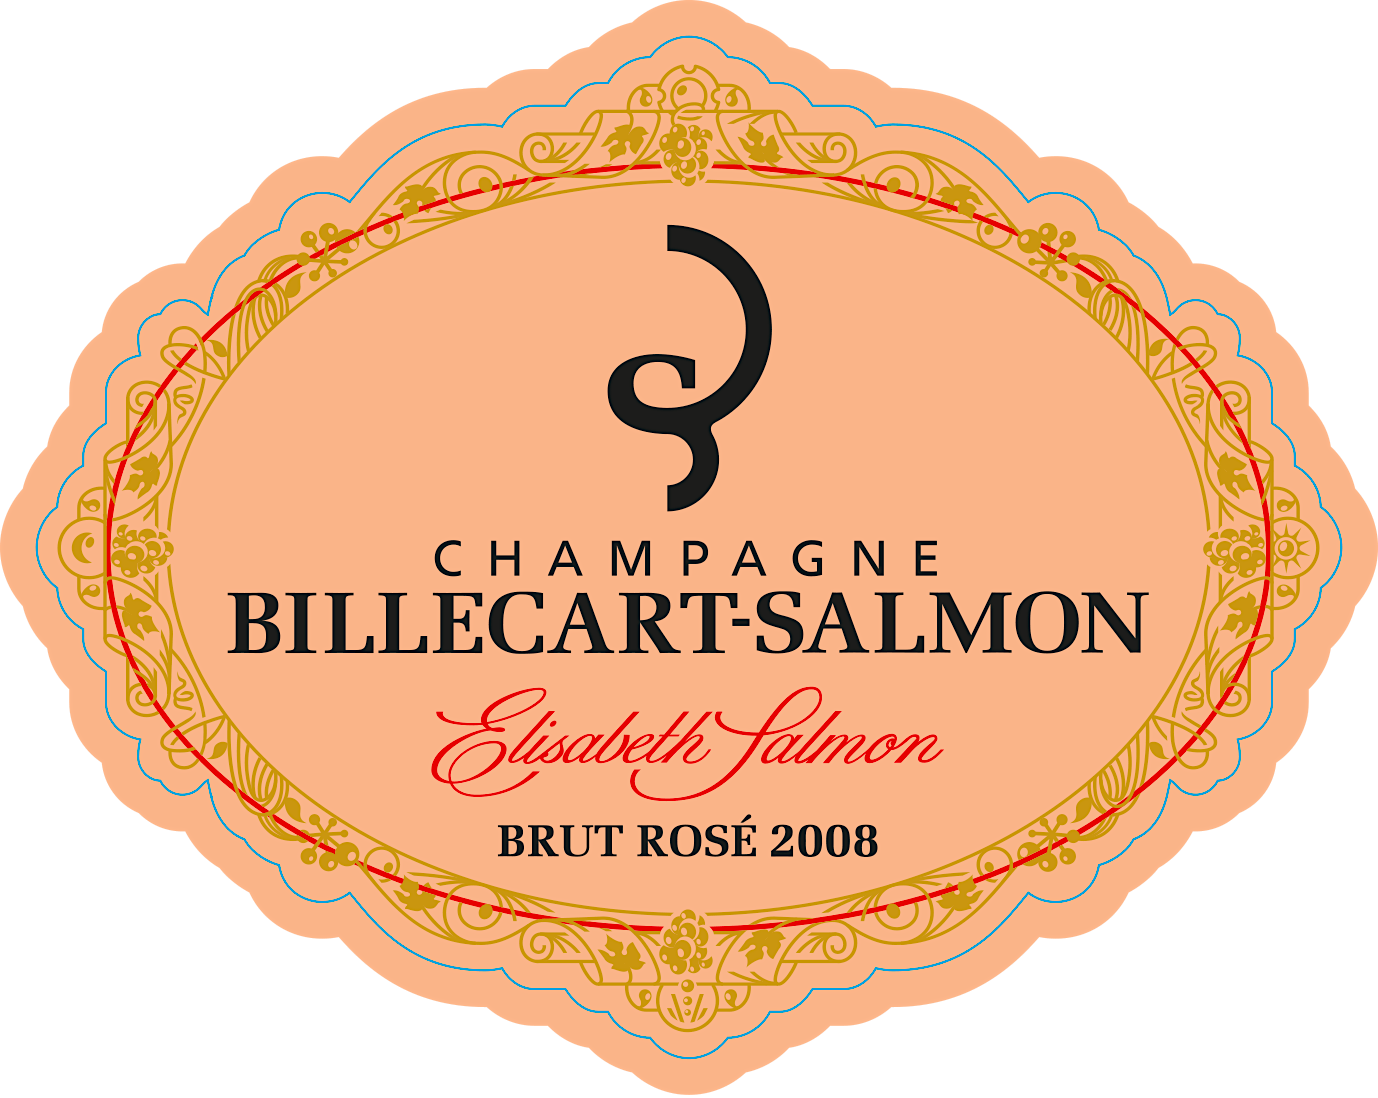 Label for Billecart-Salmon